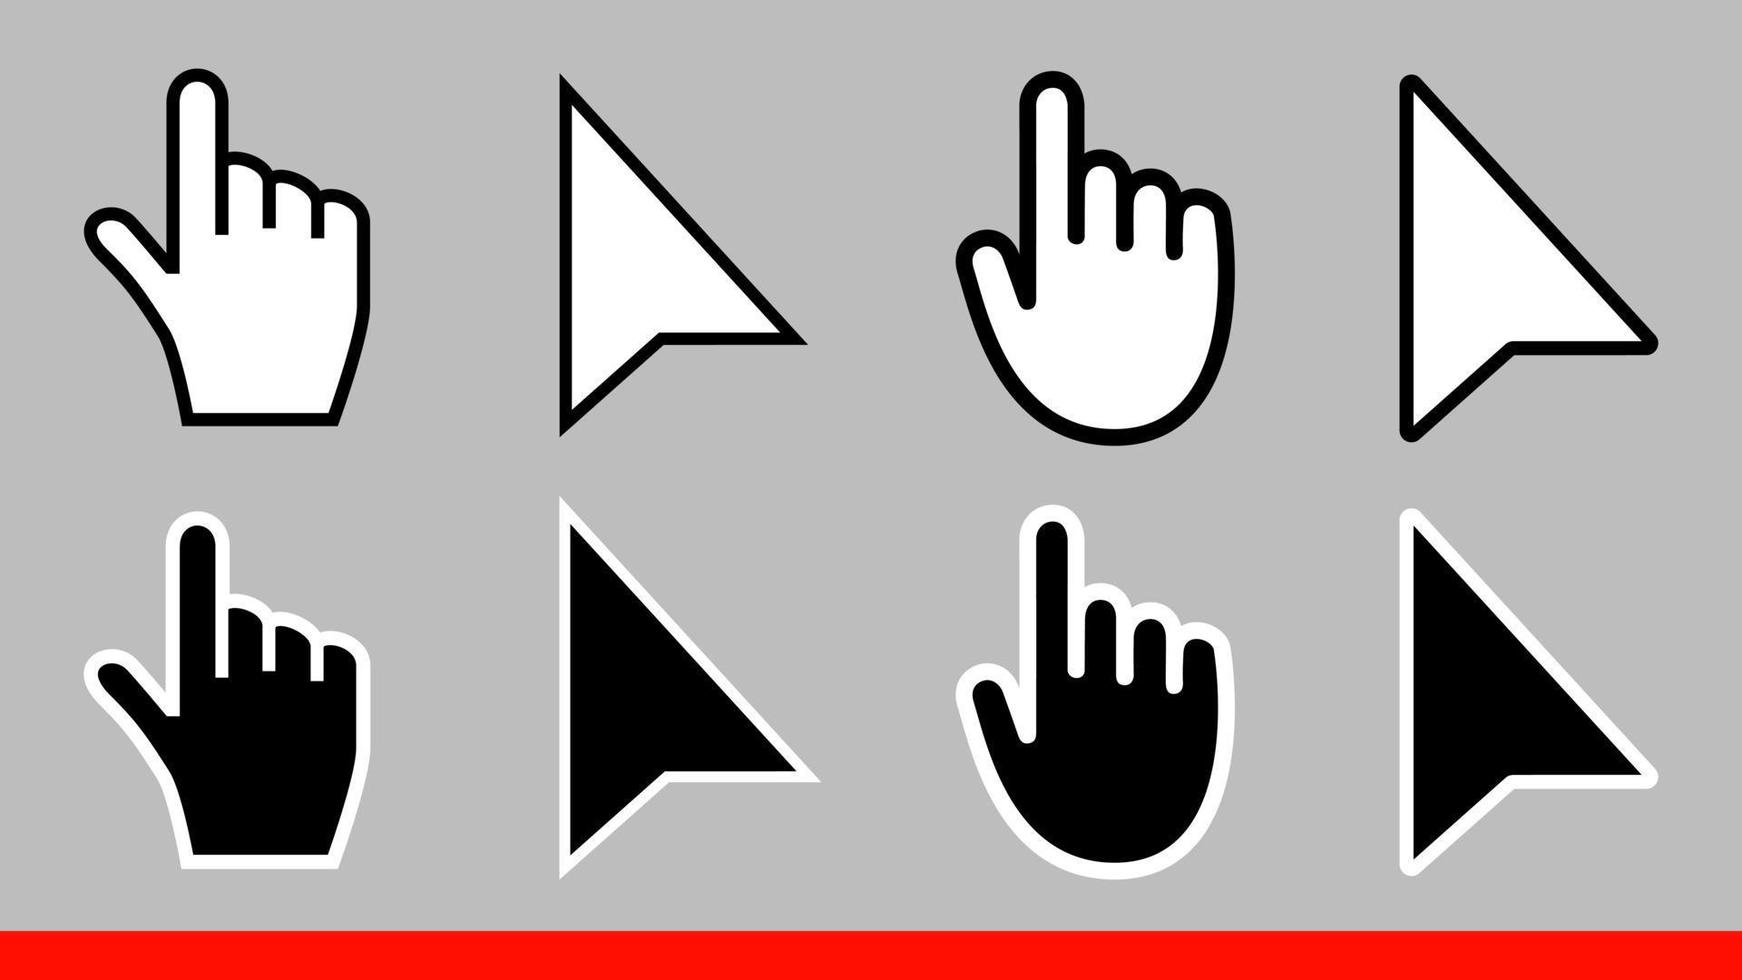 8 svartvita pilen ingen pixel mus hand markörer ikoner vektor illustration set platt stil design isolerad på vit bakgrund.